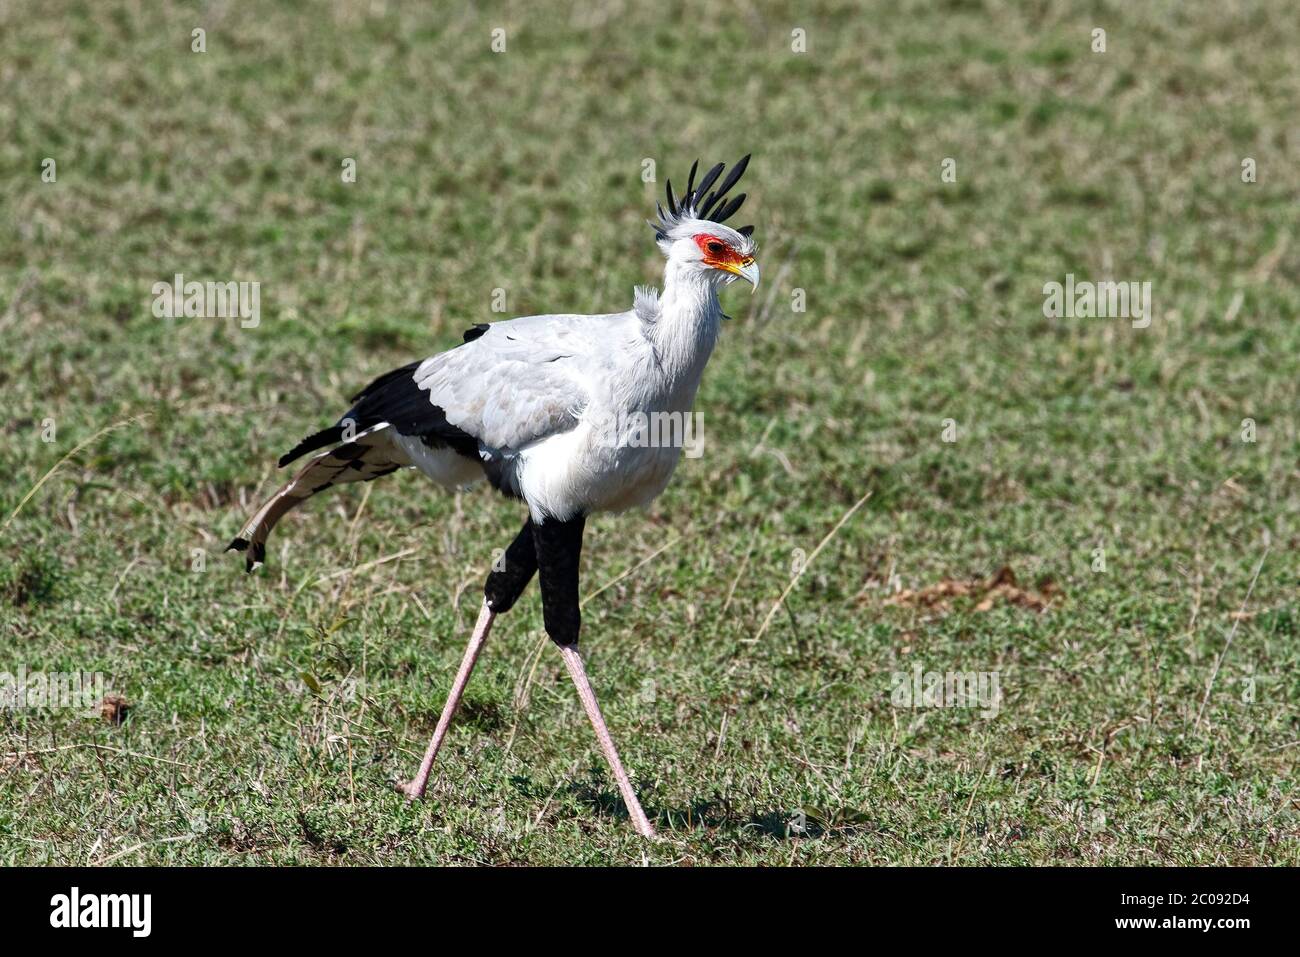 Secretary bird walking, large bird of prey, Sagittarius serpentarius, long legs, 4 feet tall, moving, black, white, grey, small plume, wildlife, natur Stock Photo